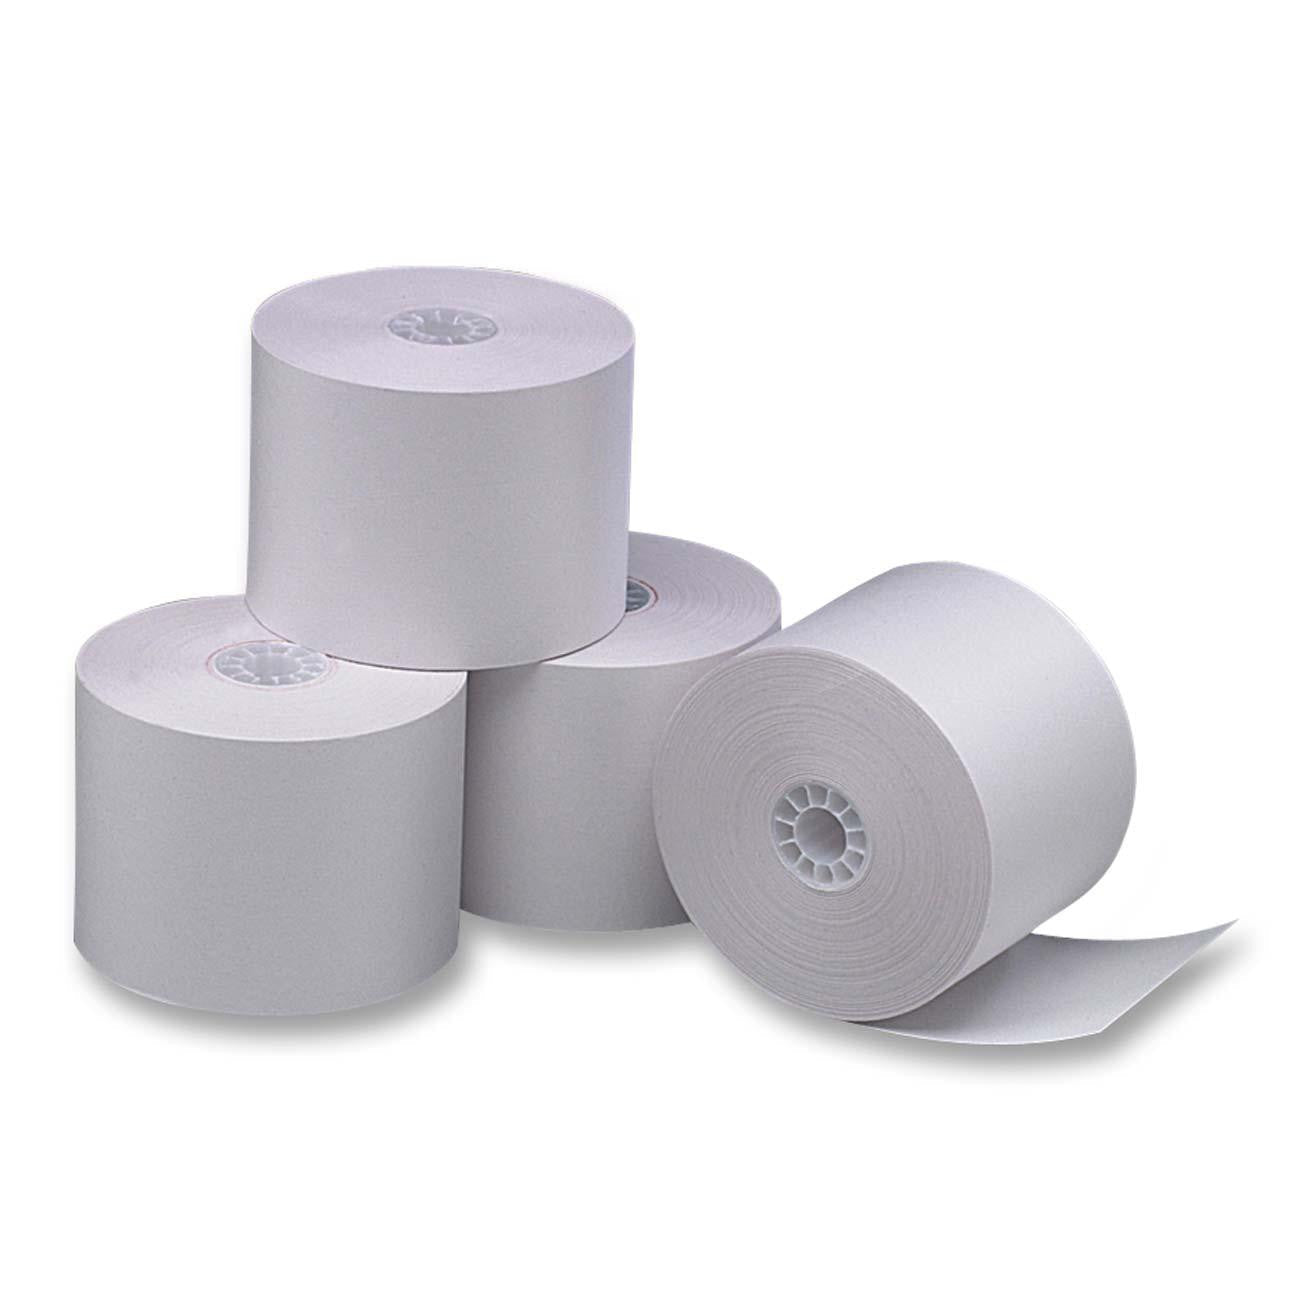 Thermal Printer Paper Roll Value Bundle (50 Rolls)